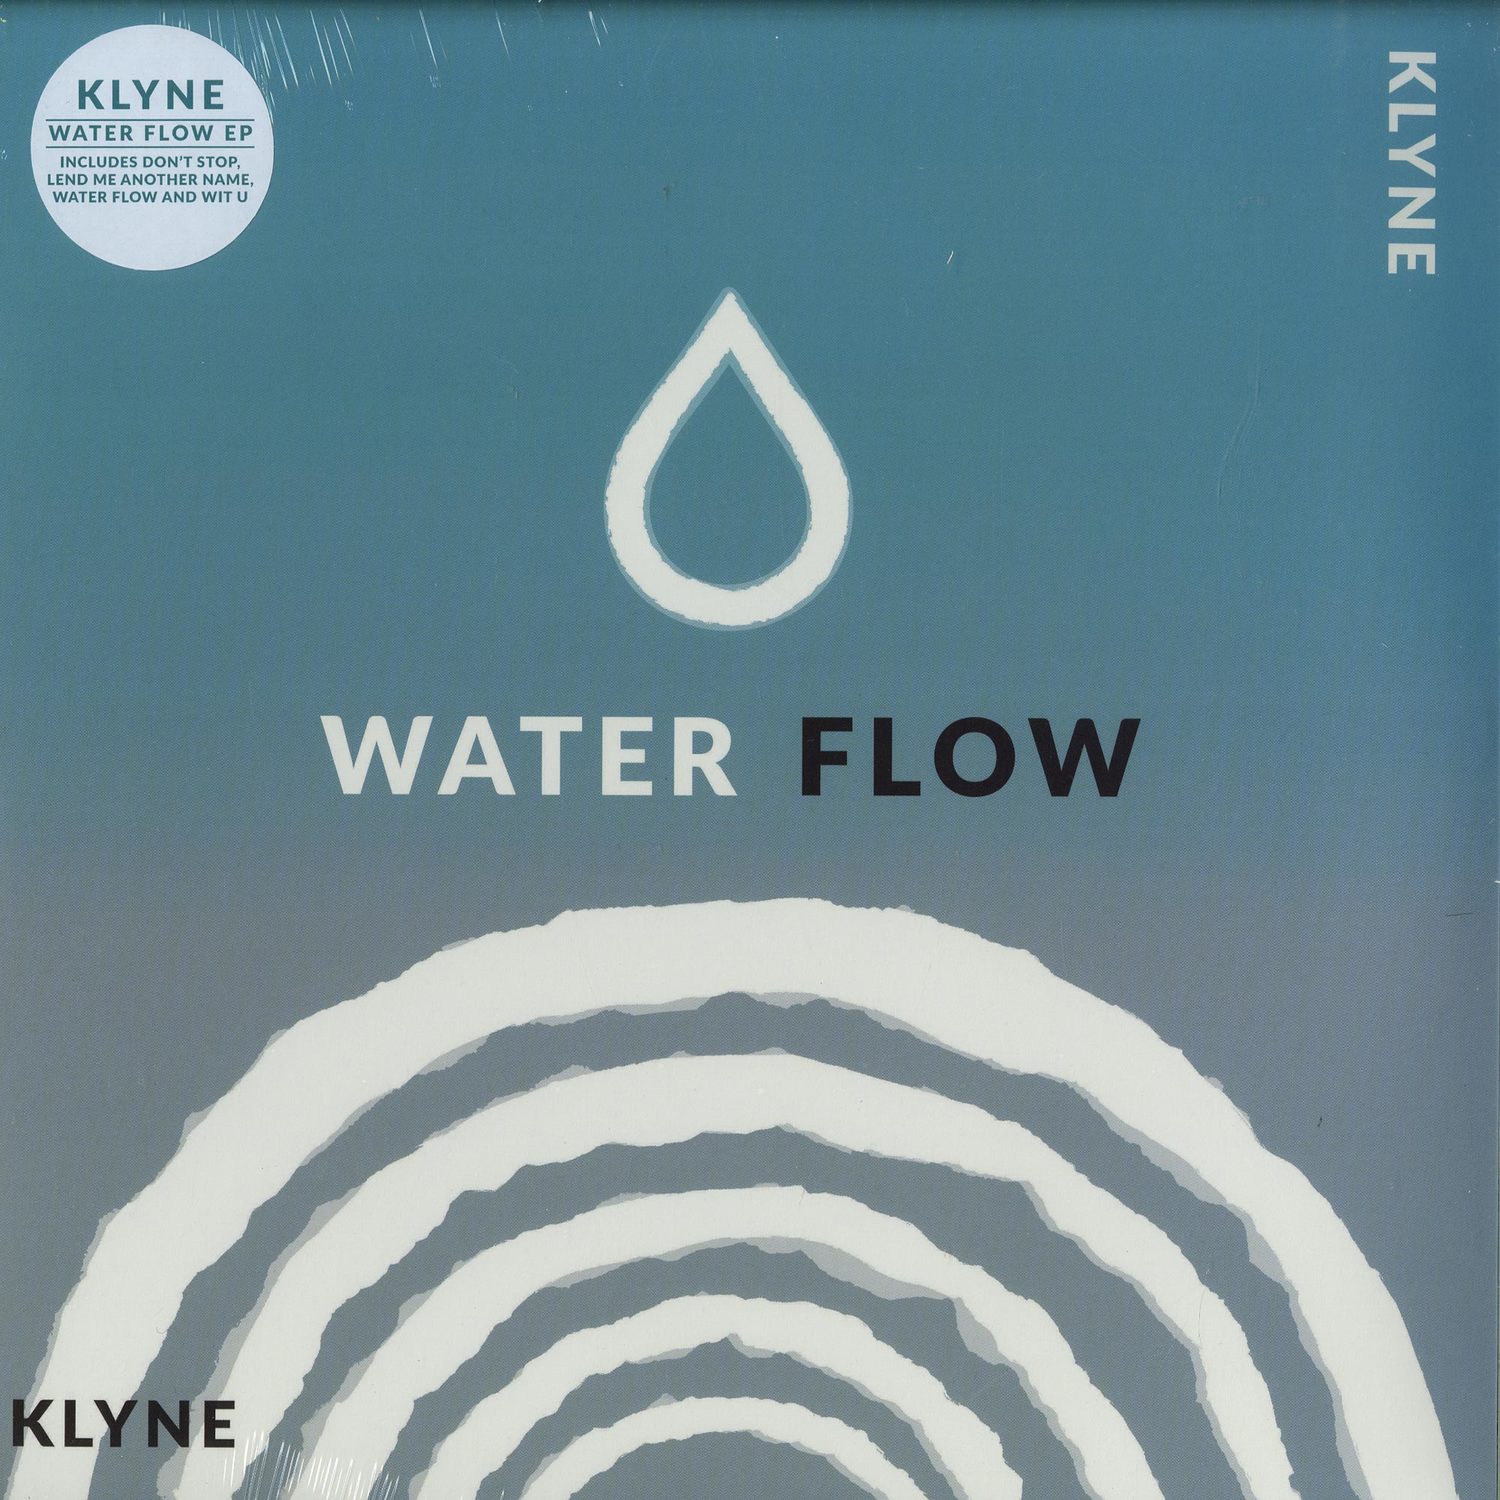 Klyne - WATER FLOW / WIT U